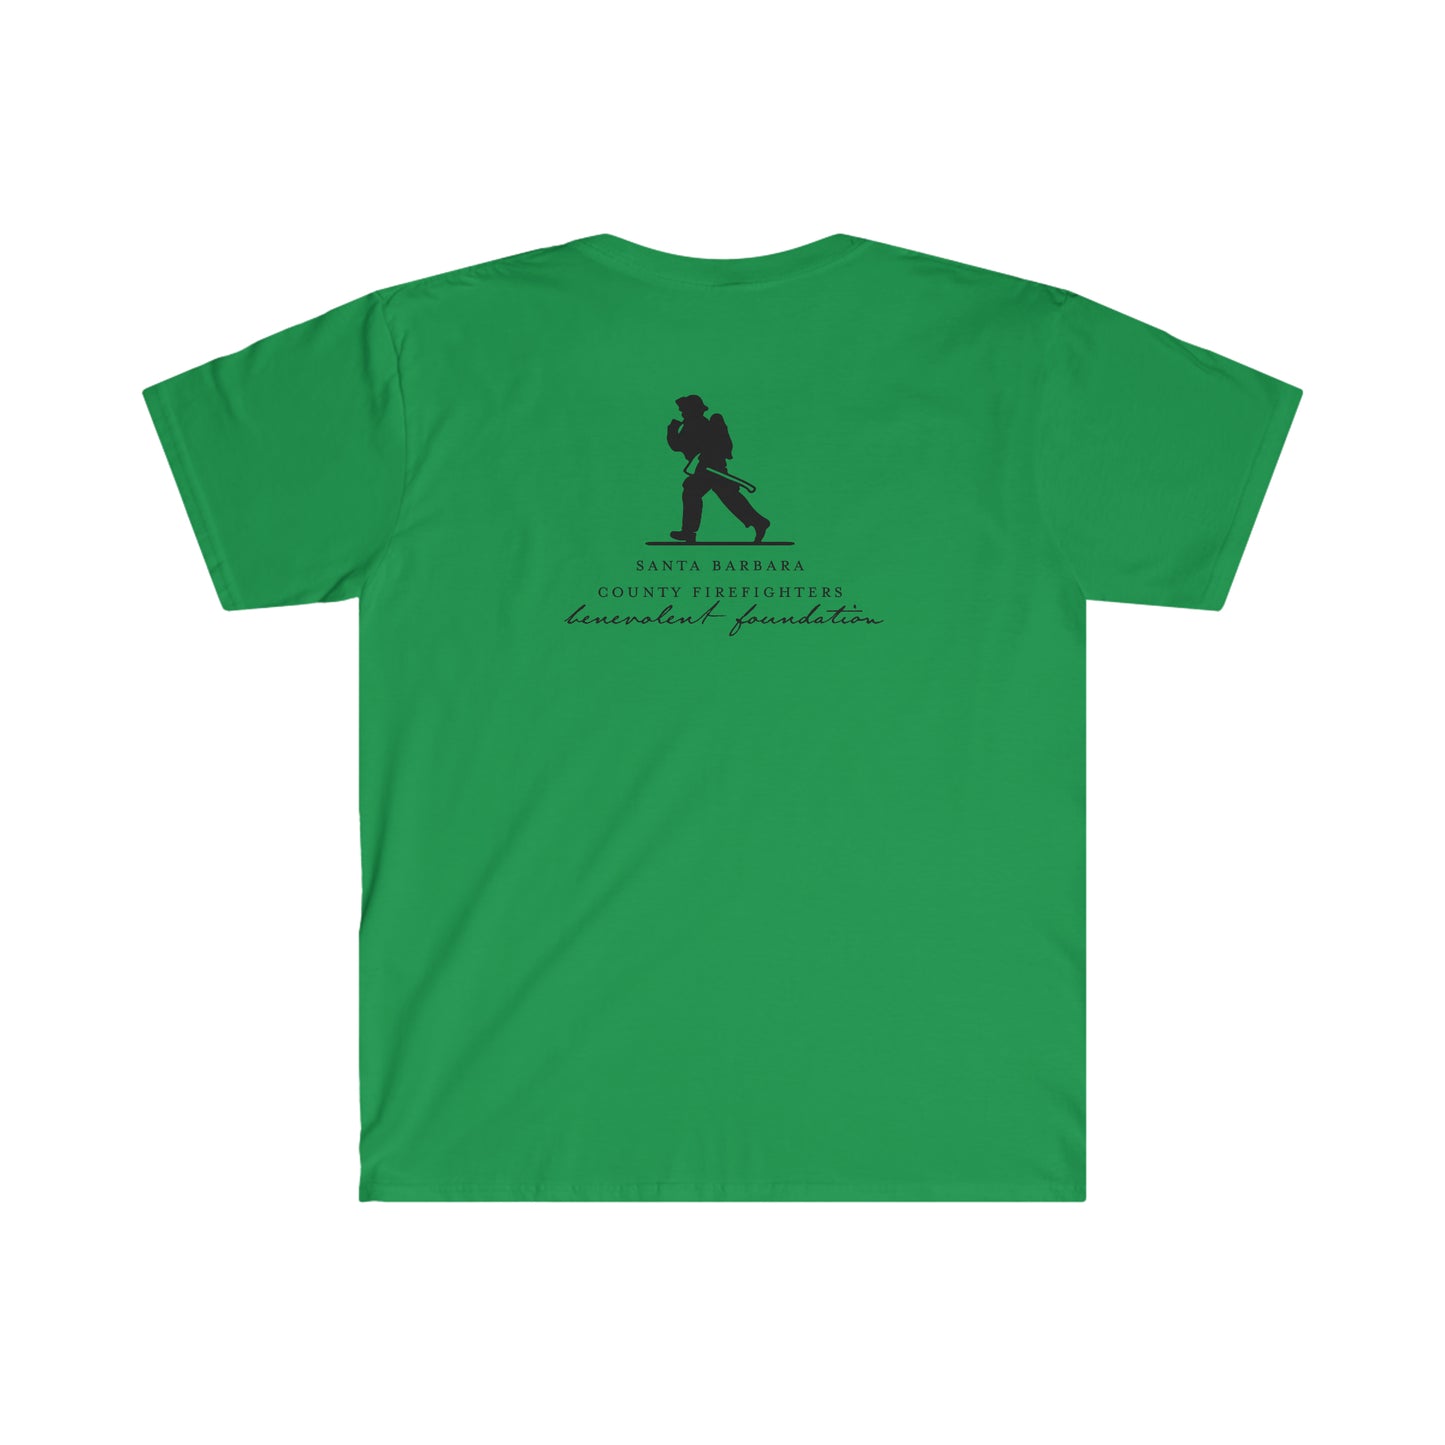 Benevolent Foundation T-Shirt